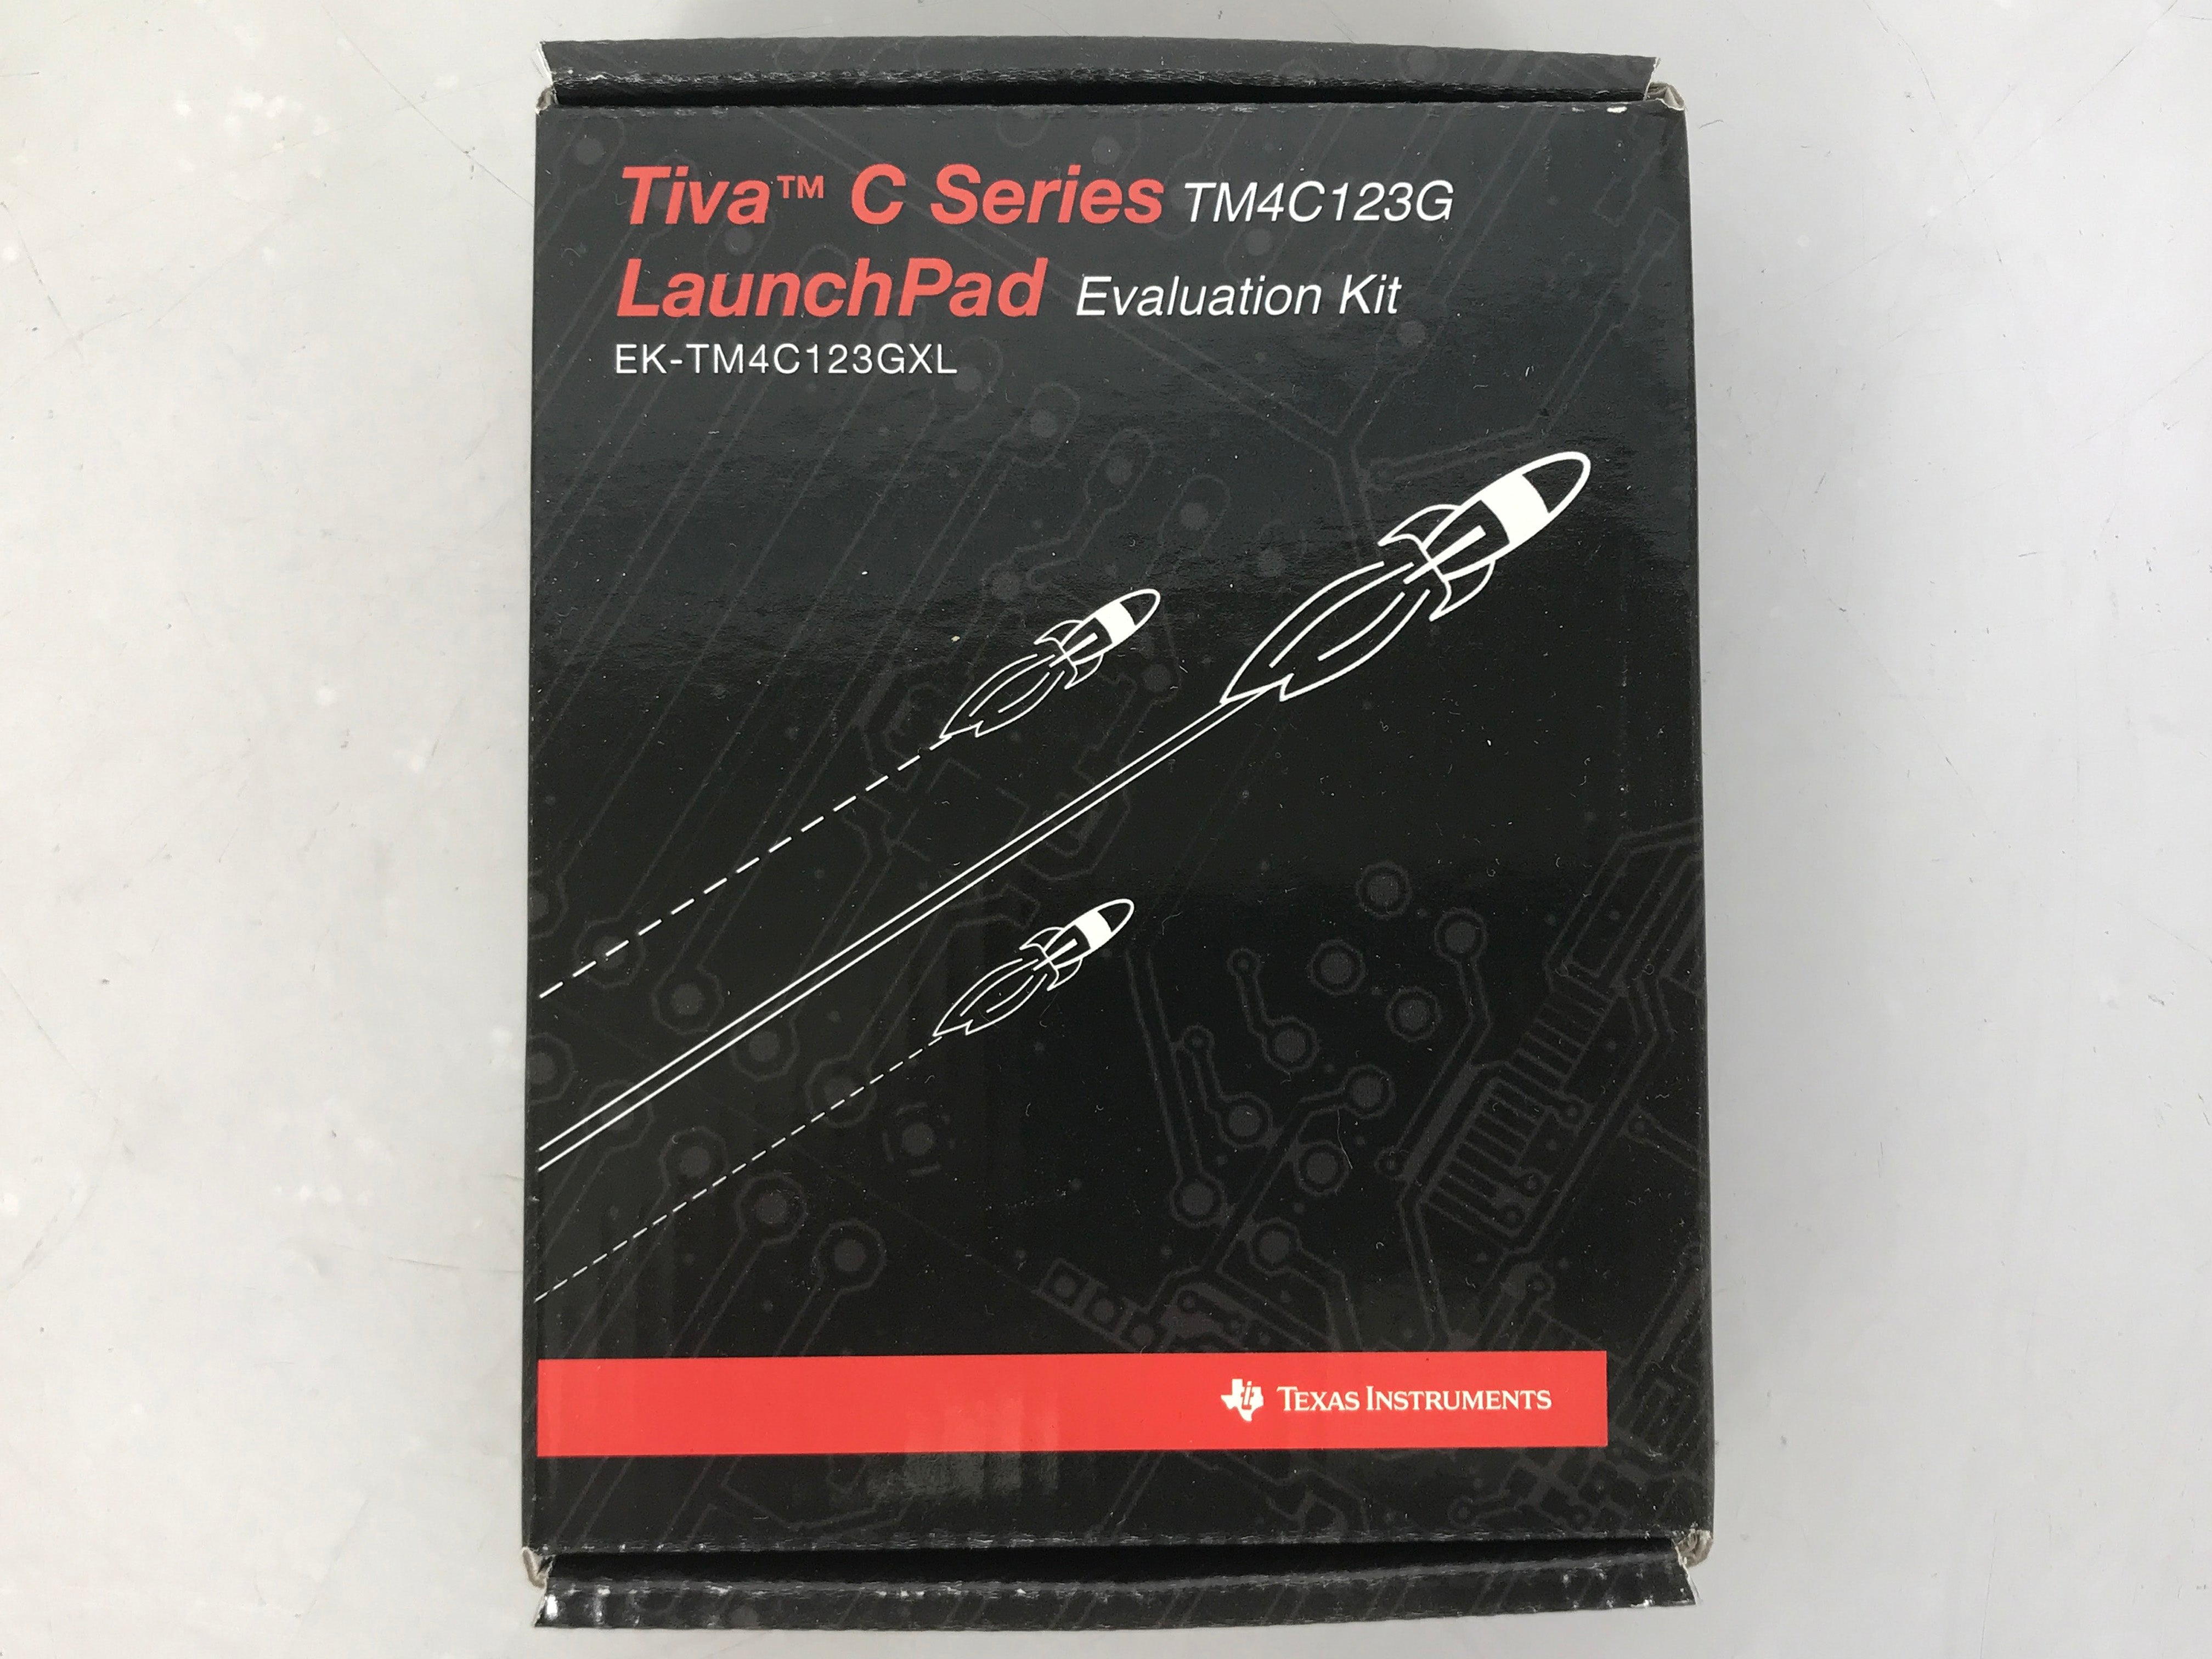 Texas Instruments Tiva C Series TM4C123G LaunchPad Evaluation Kit